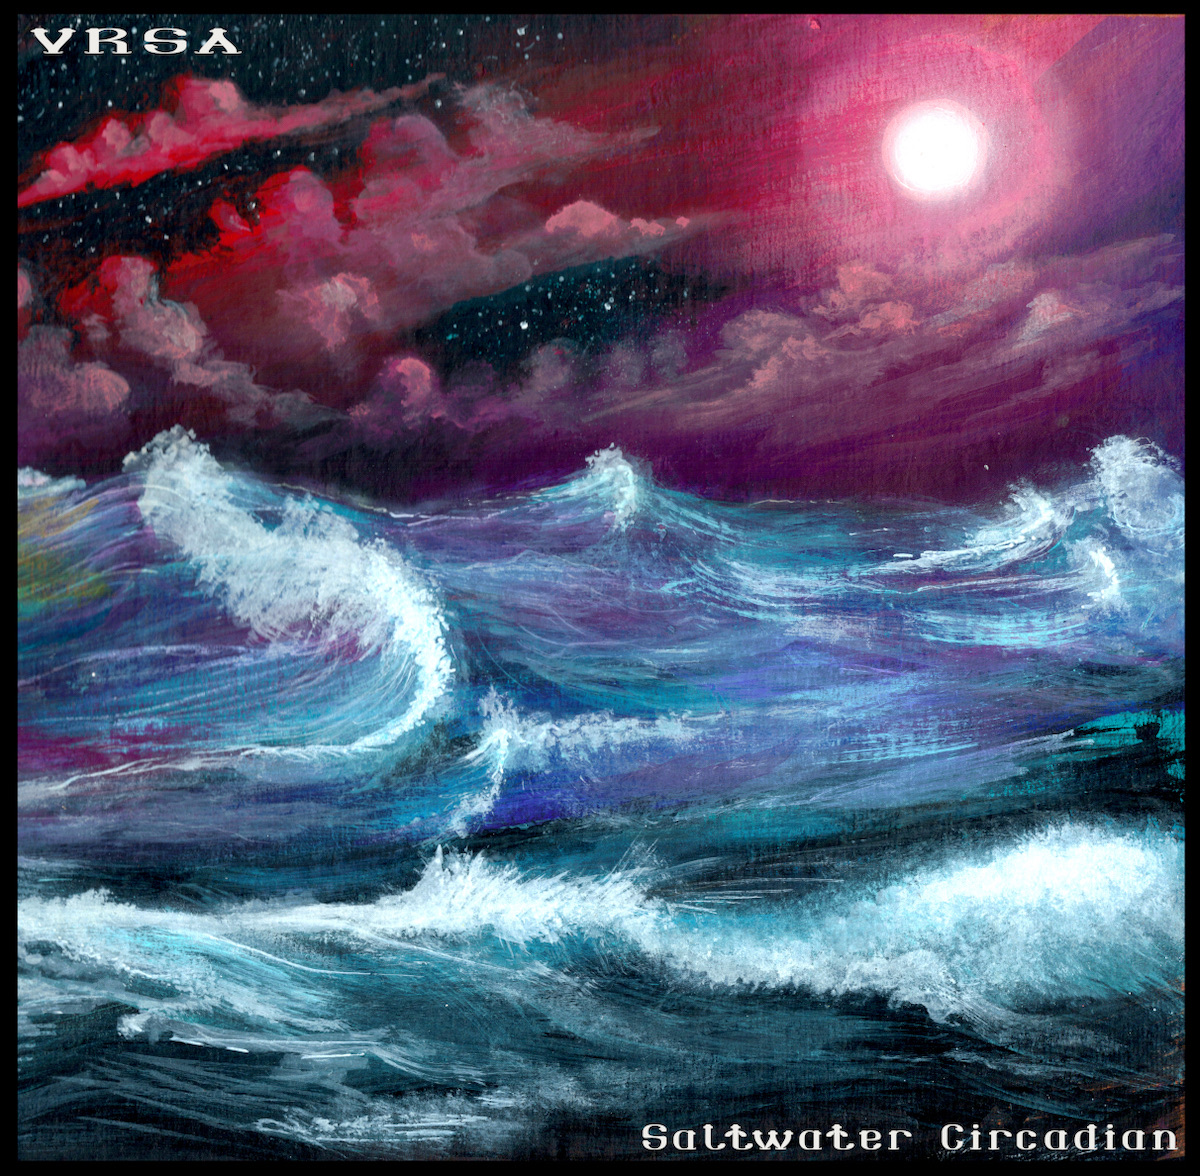 ALBUM REVIEW: Saltwater Circadian by VRSA